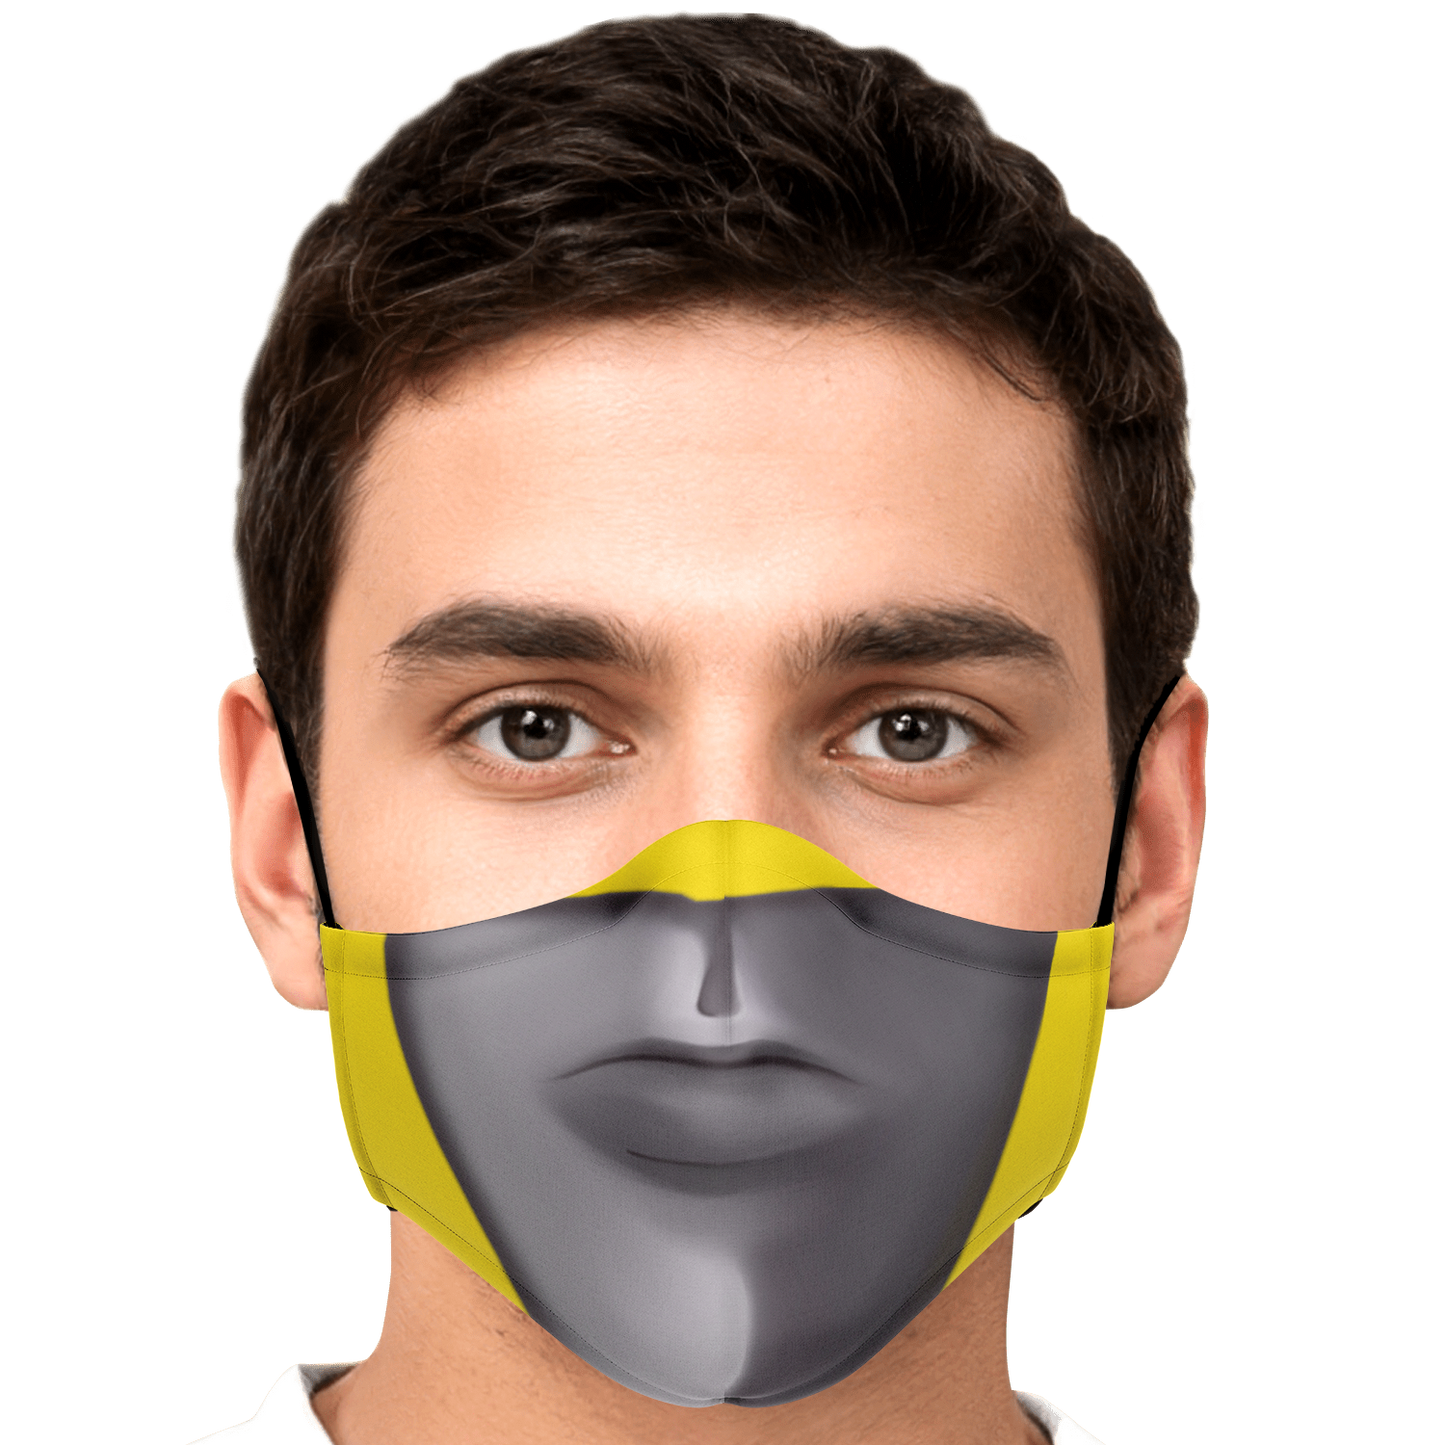 GU 'Yellow Ranger' Fashion Mask